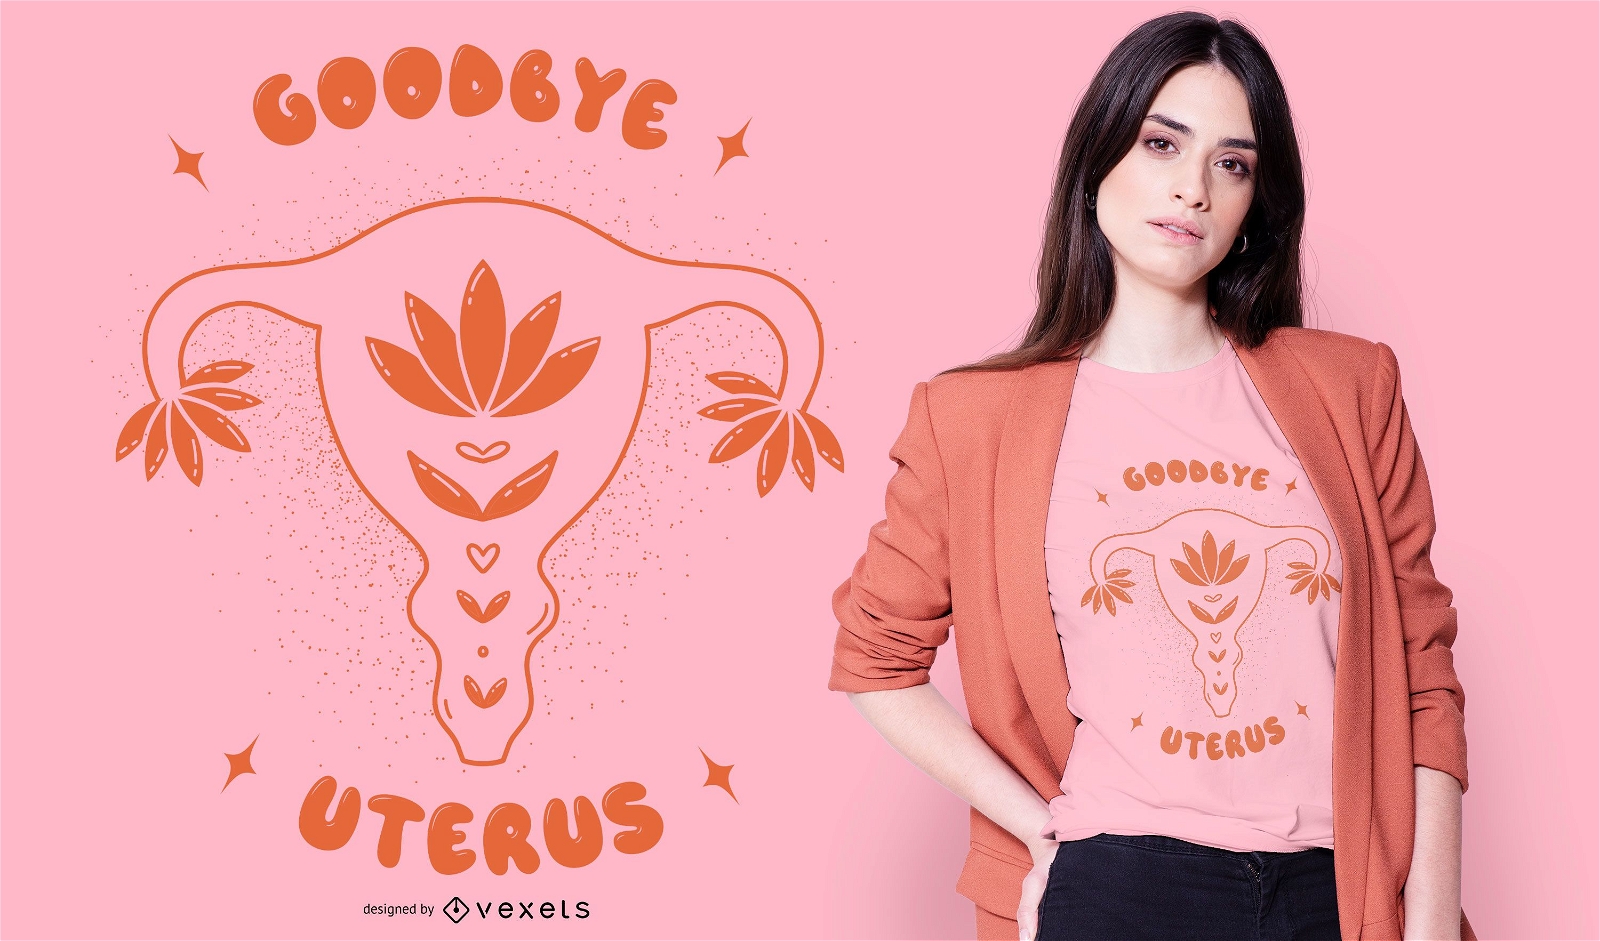 Dise?o de camiseta Goodbye Uterus